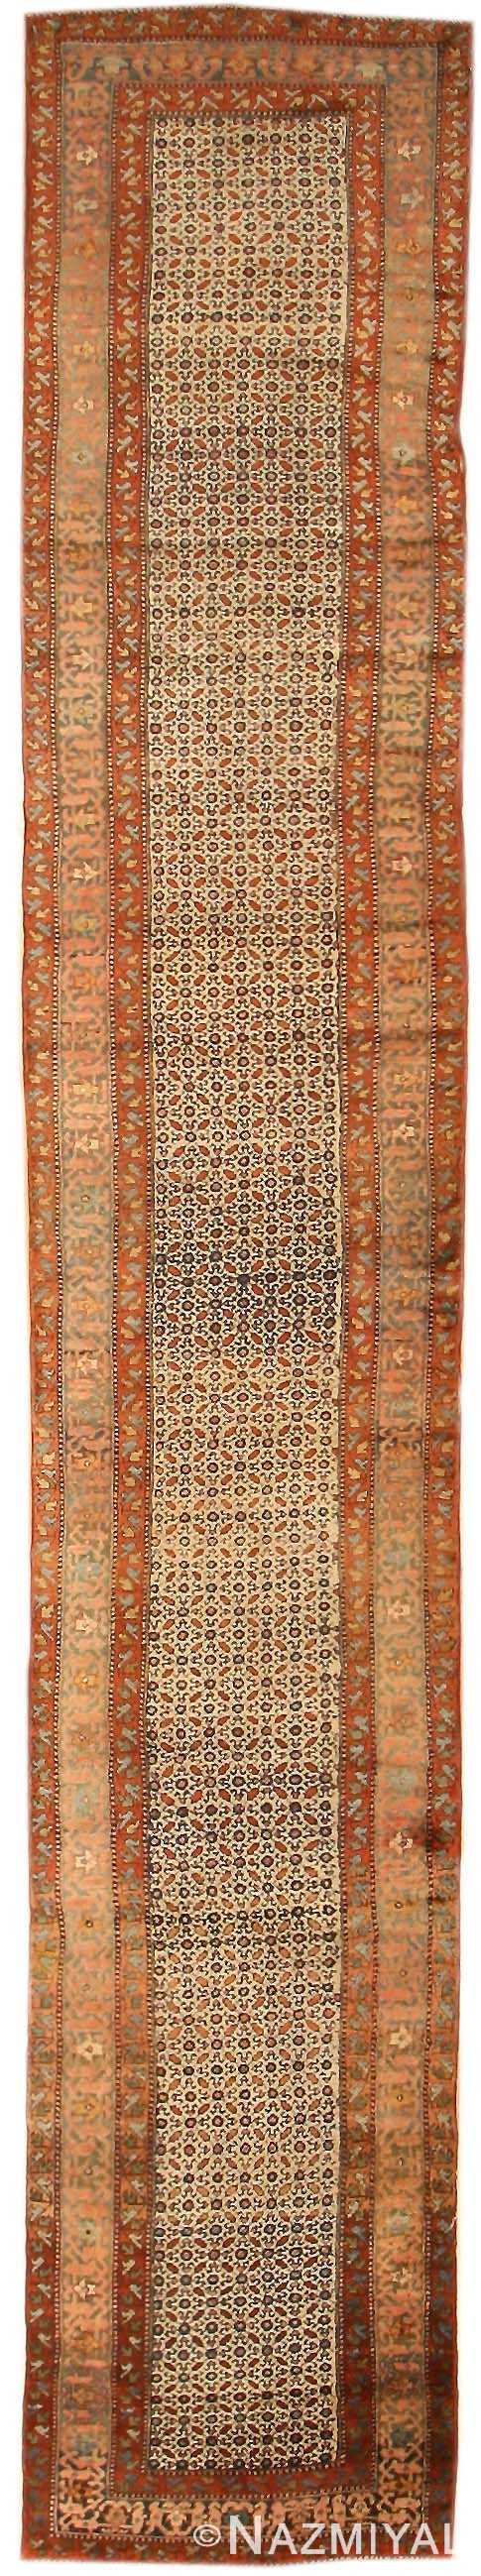 Antique Malayer Persian Rugs 43843 Nazmiyal